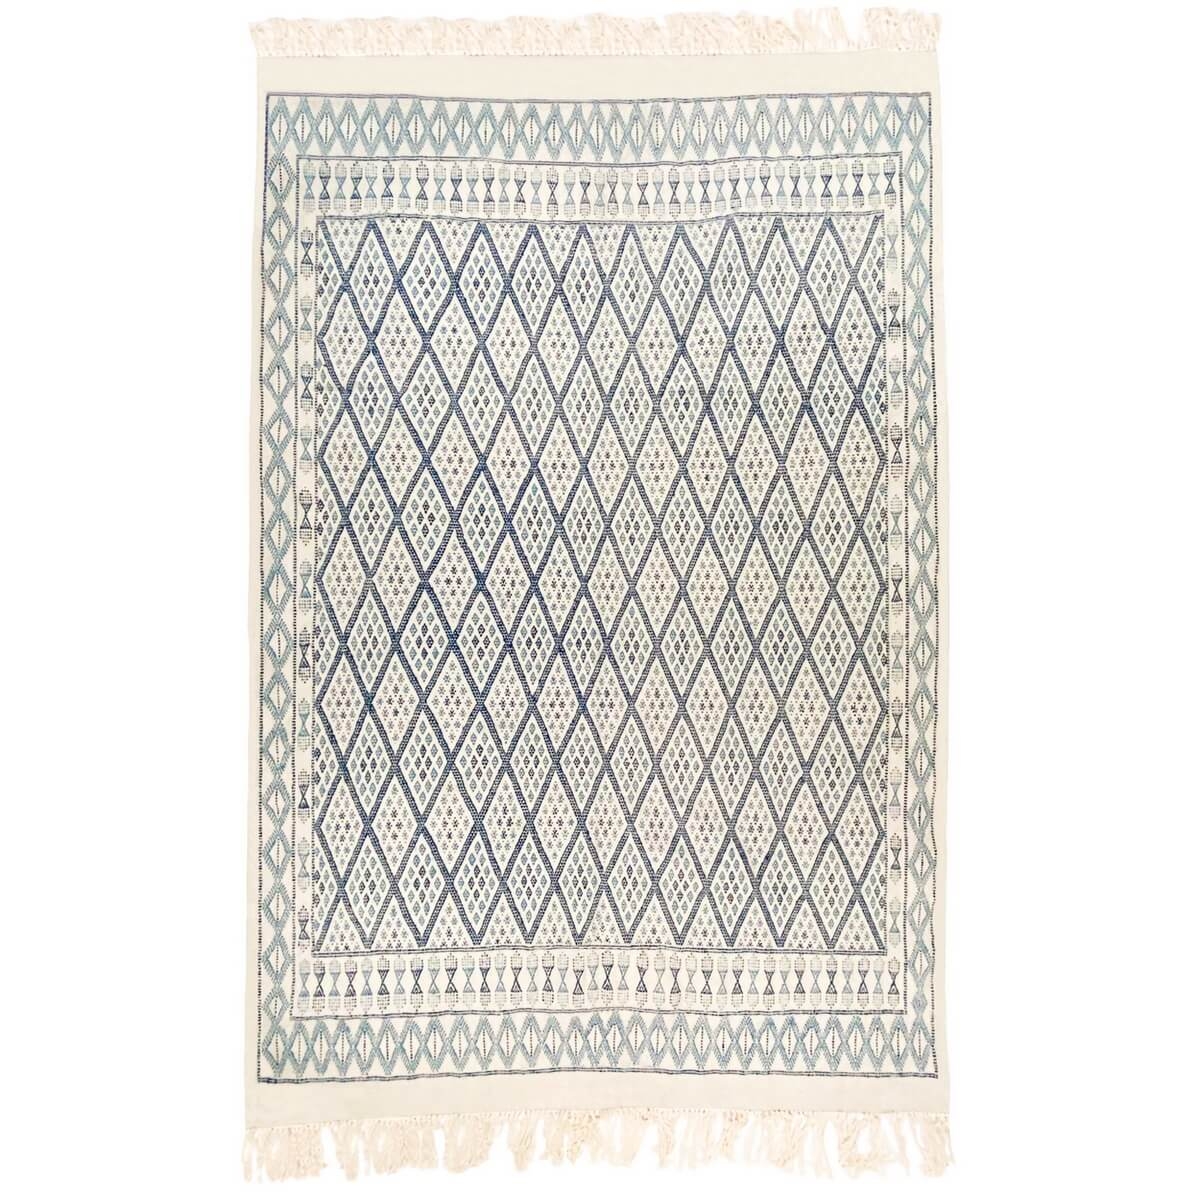 Berber carpet Rug Margoum Eddouh 210x290 Blue/White (Handmade, Wool, Tunisia) Tunisian margoum rug from the city of Kairouan. Re